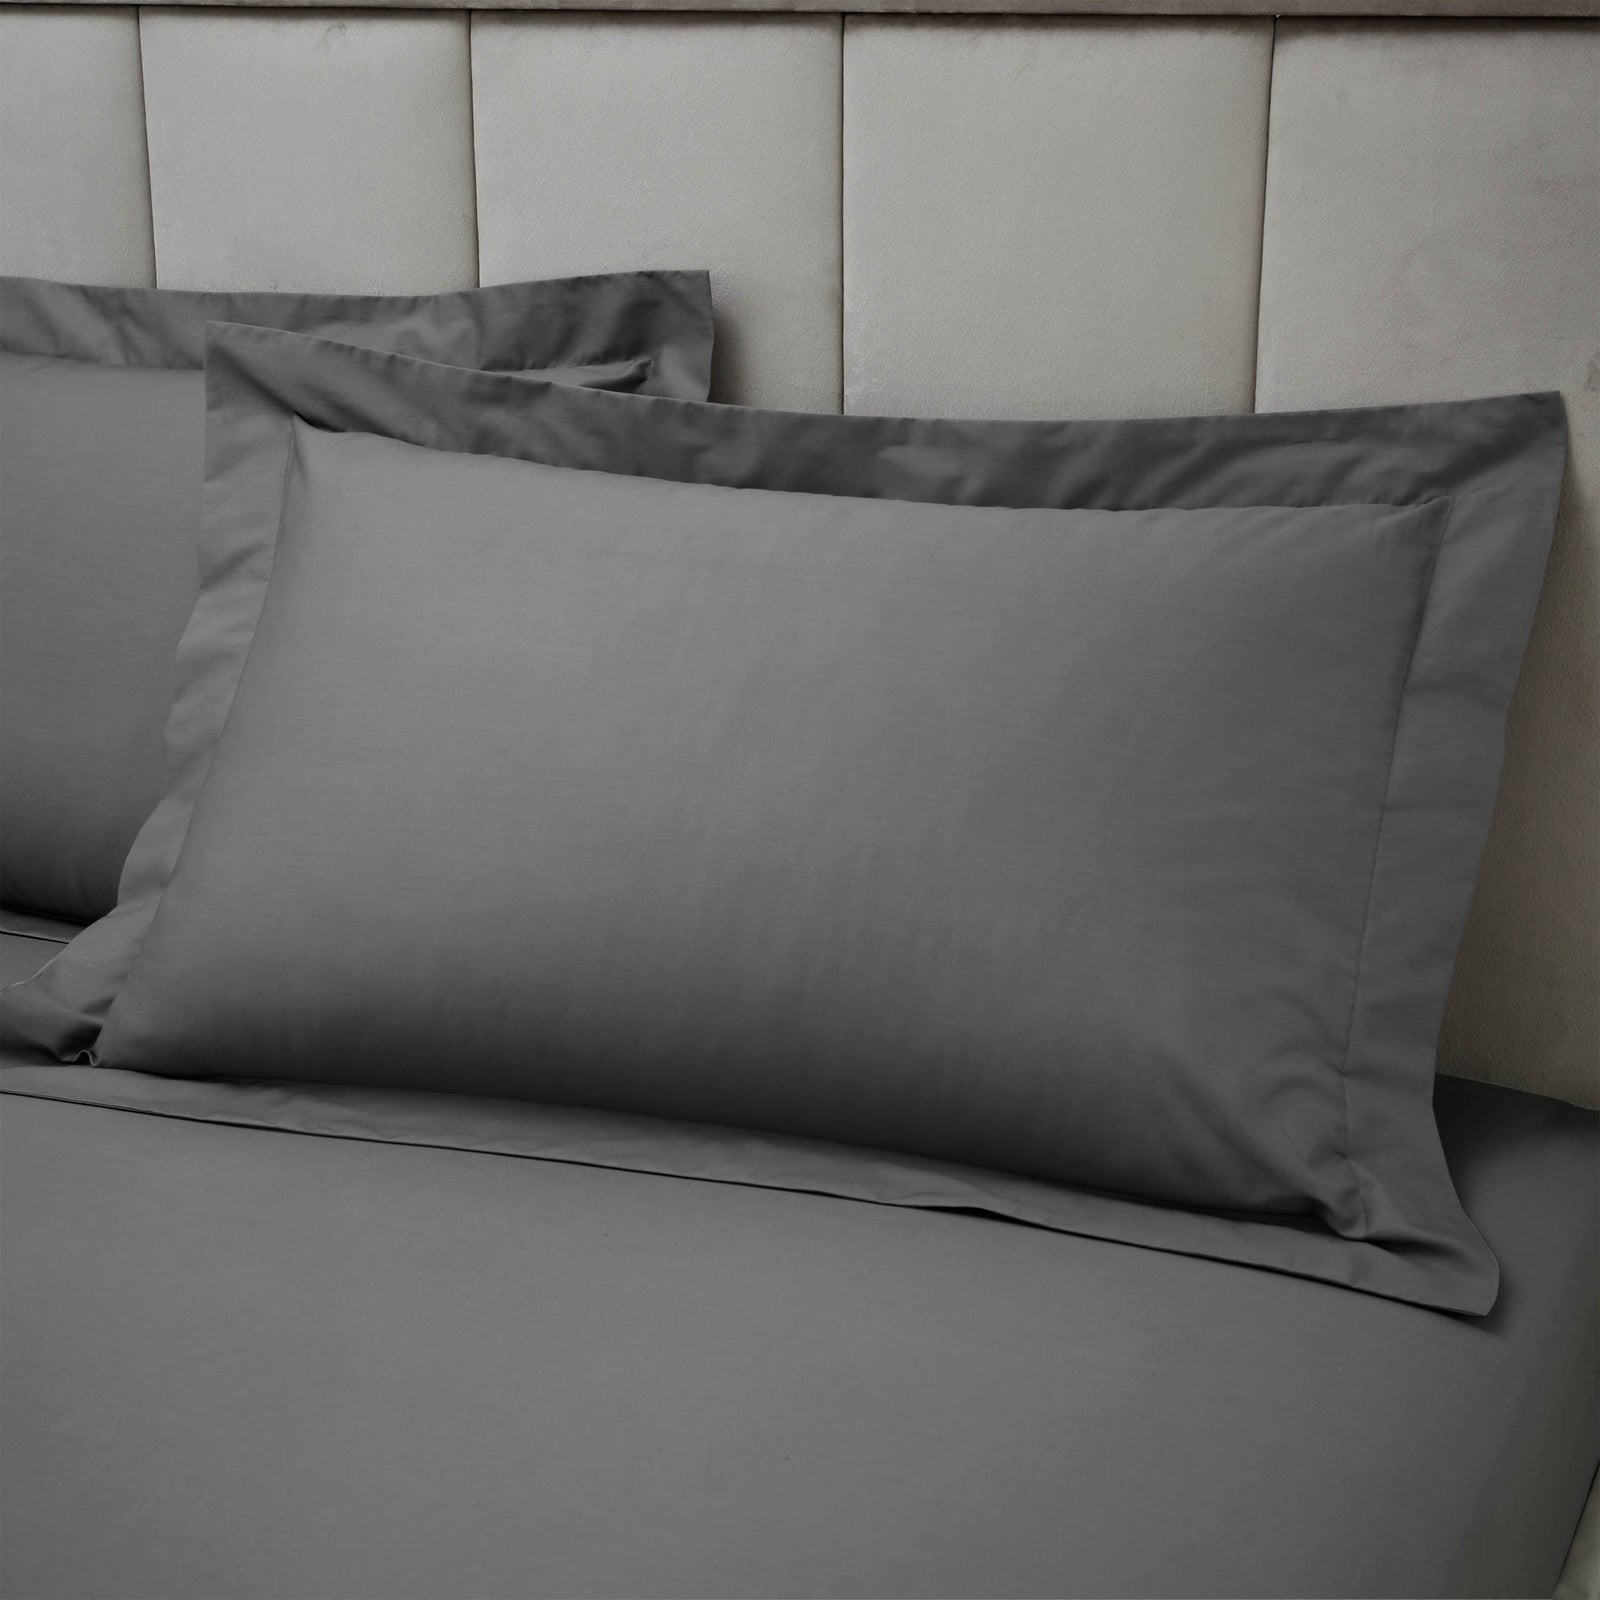 Bianca Fine Linens Egyptian Cotton Oxford 50x75cm Charcoal Grey